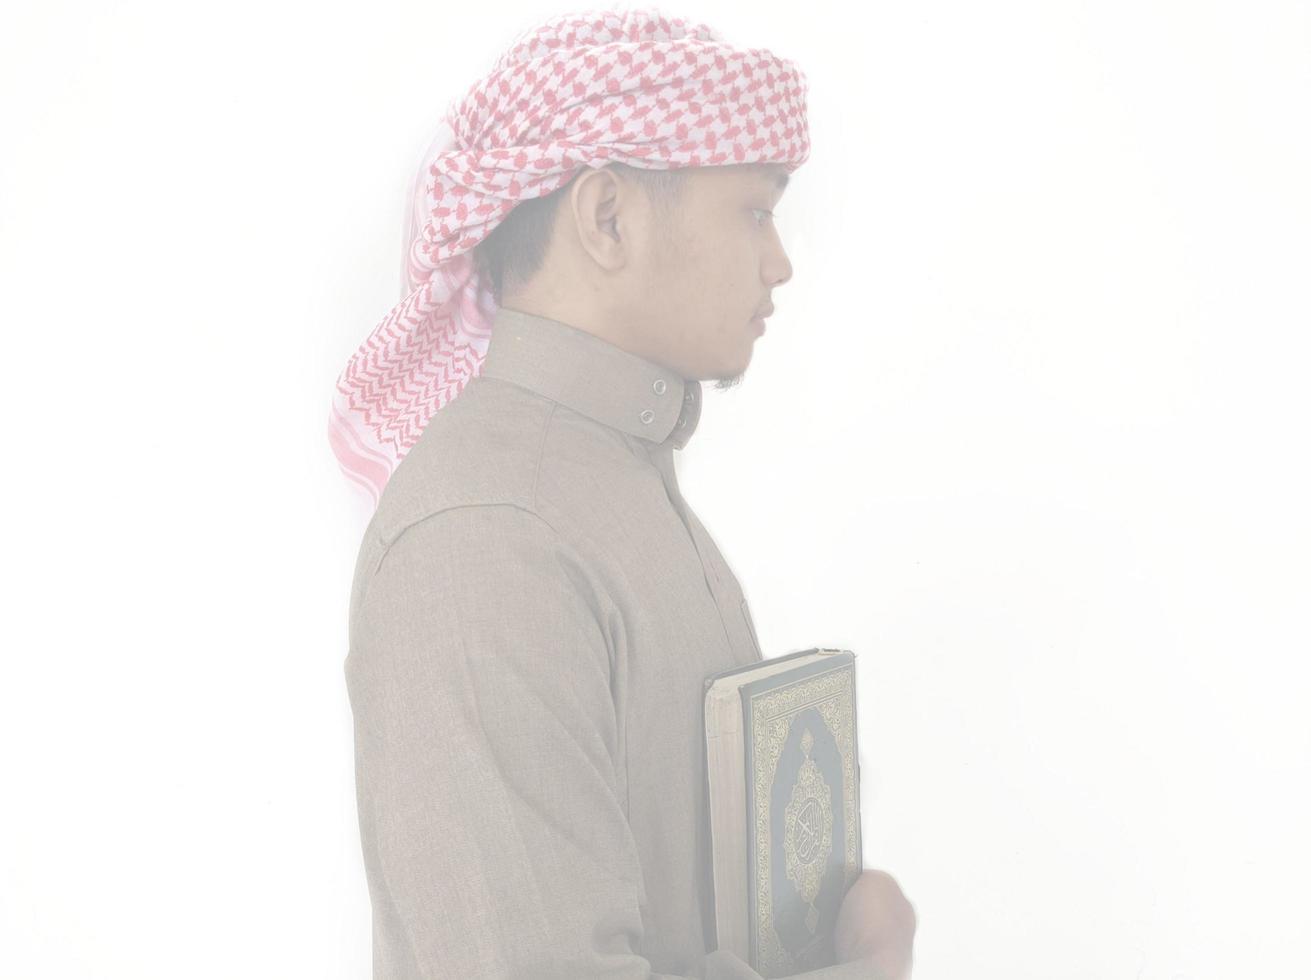 Indonesia. 31 January 2023. Photo of man reading a quran ready for Ramadan.